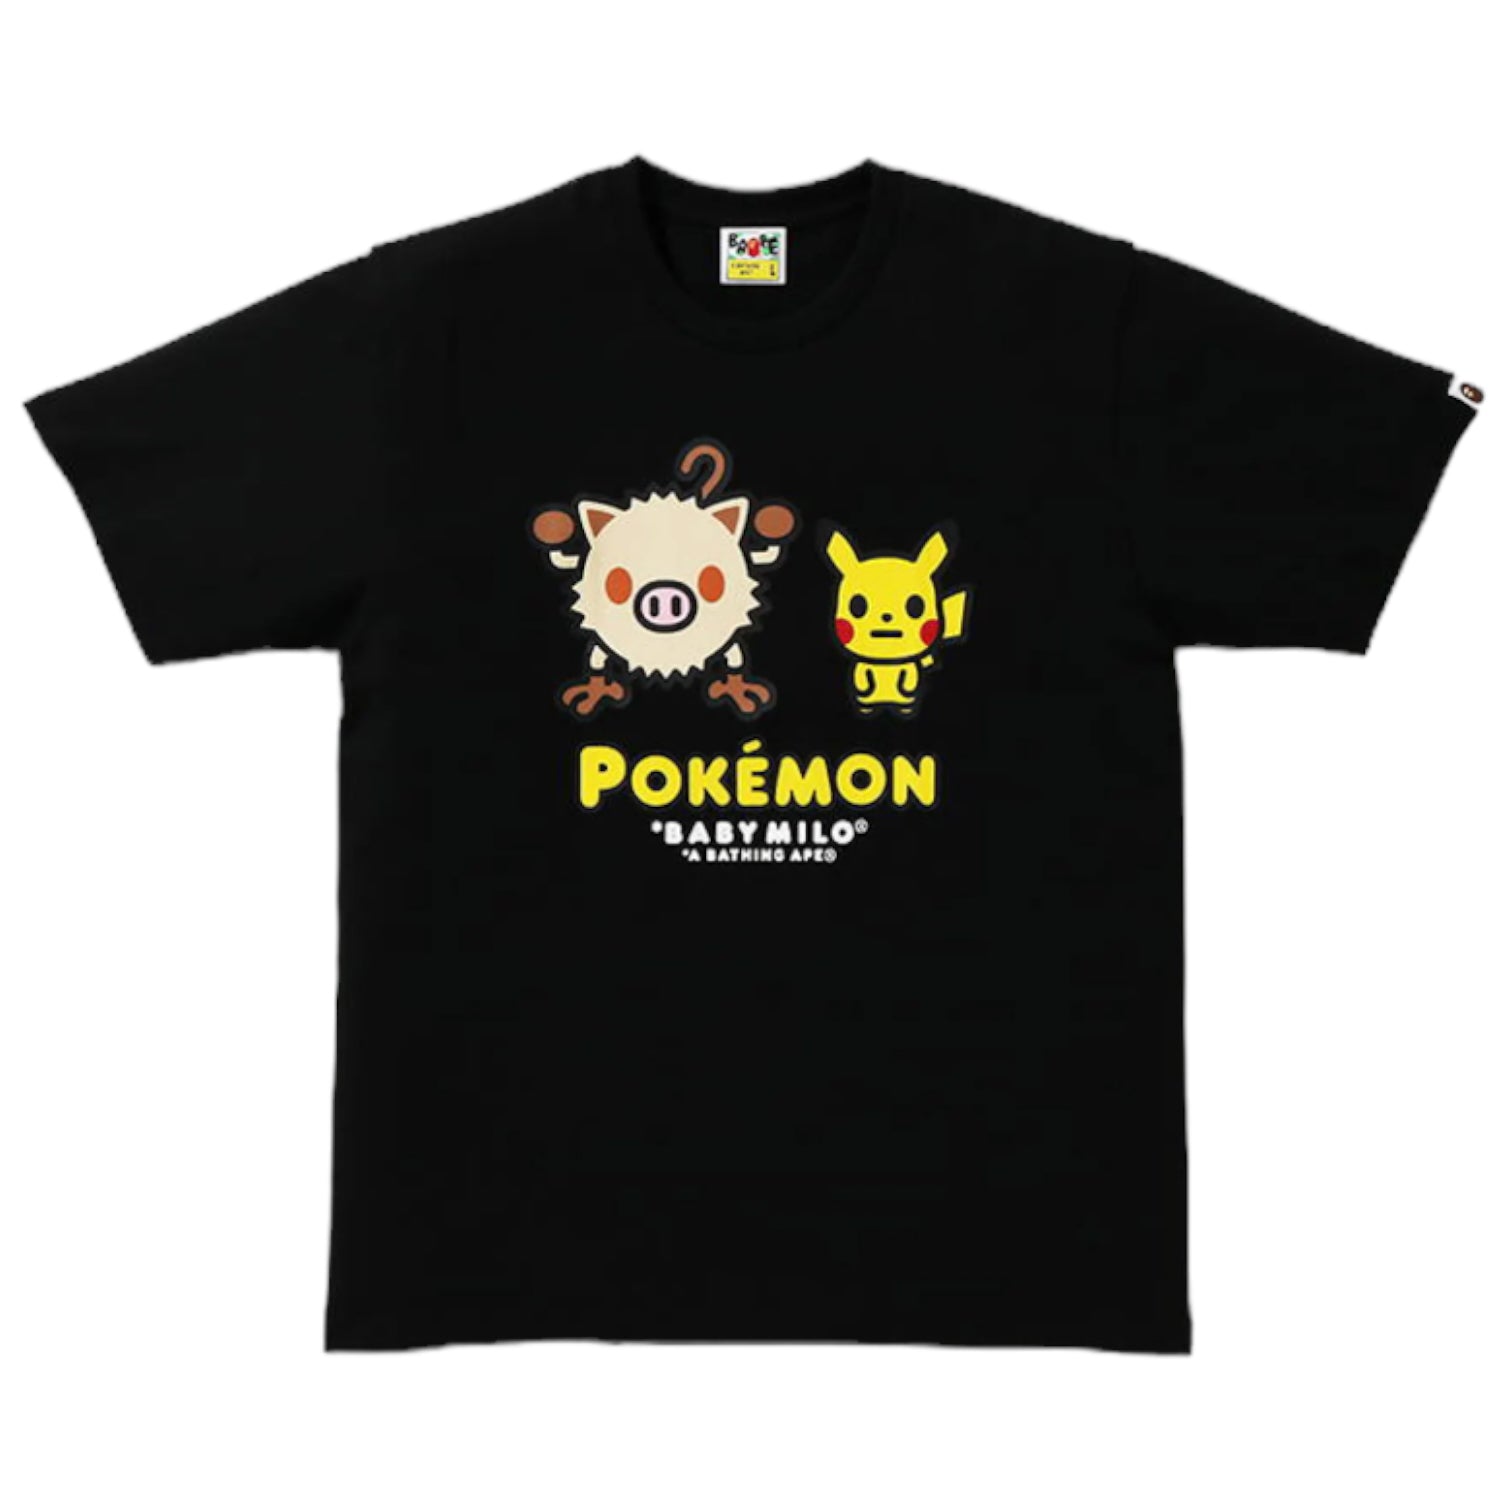 BAPE Baby Milo Pokemon Shirt - Black Graphic Shirt